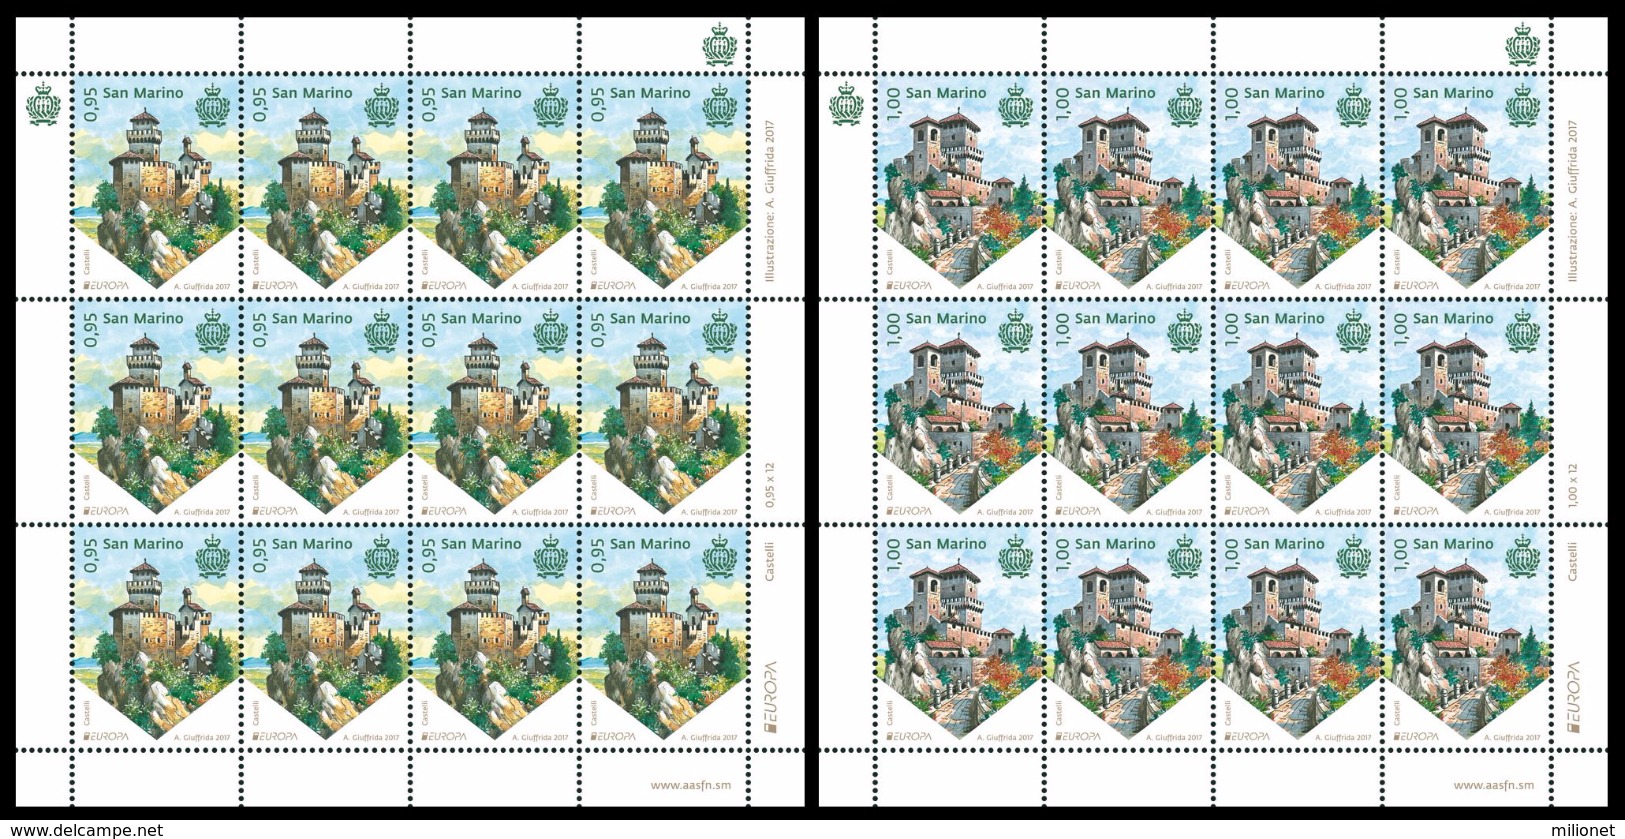 SALE!!! SAN MARINO 2017 EUROPA CEPT CASTLES 2 Sheetlets Of 12 Stamps MNH ** - 2017